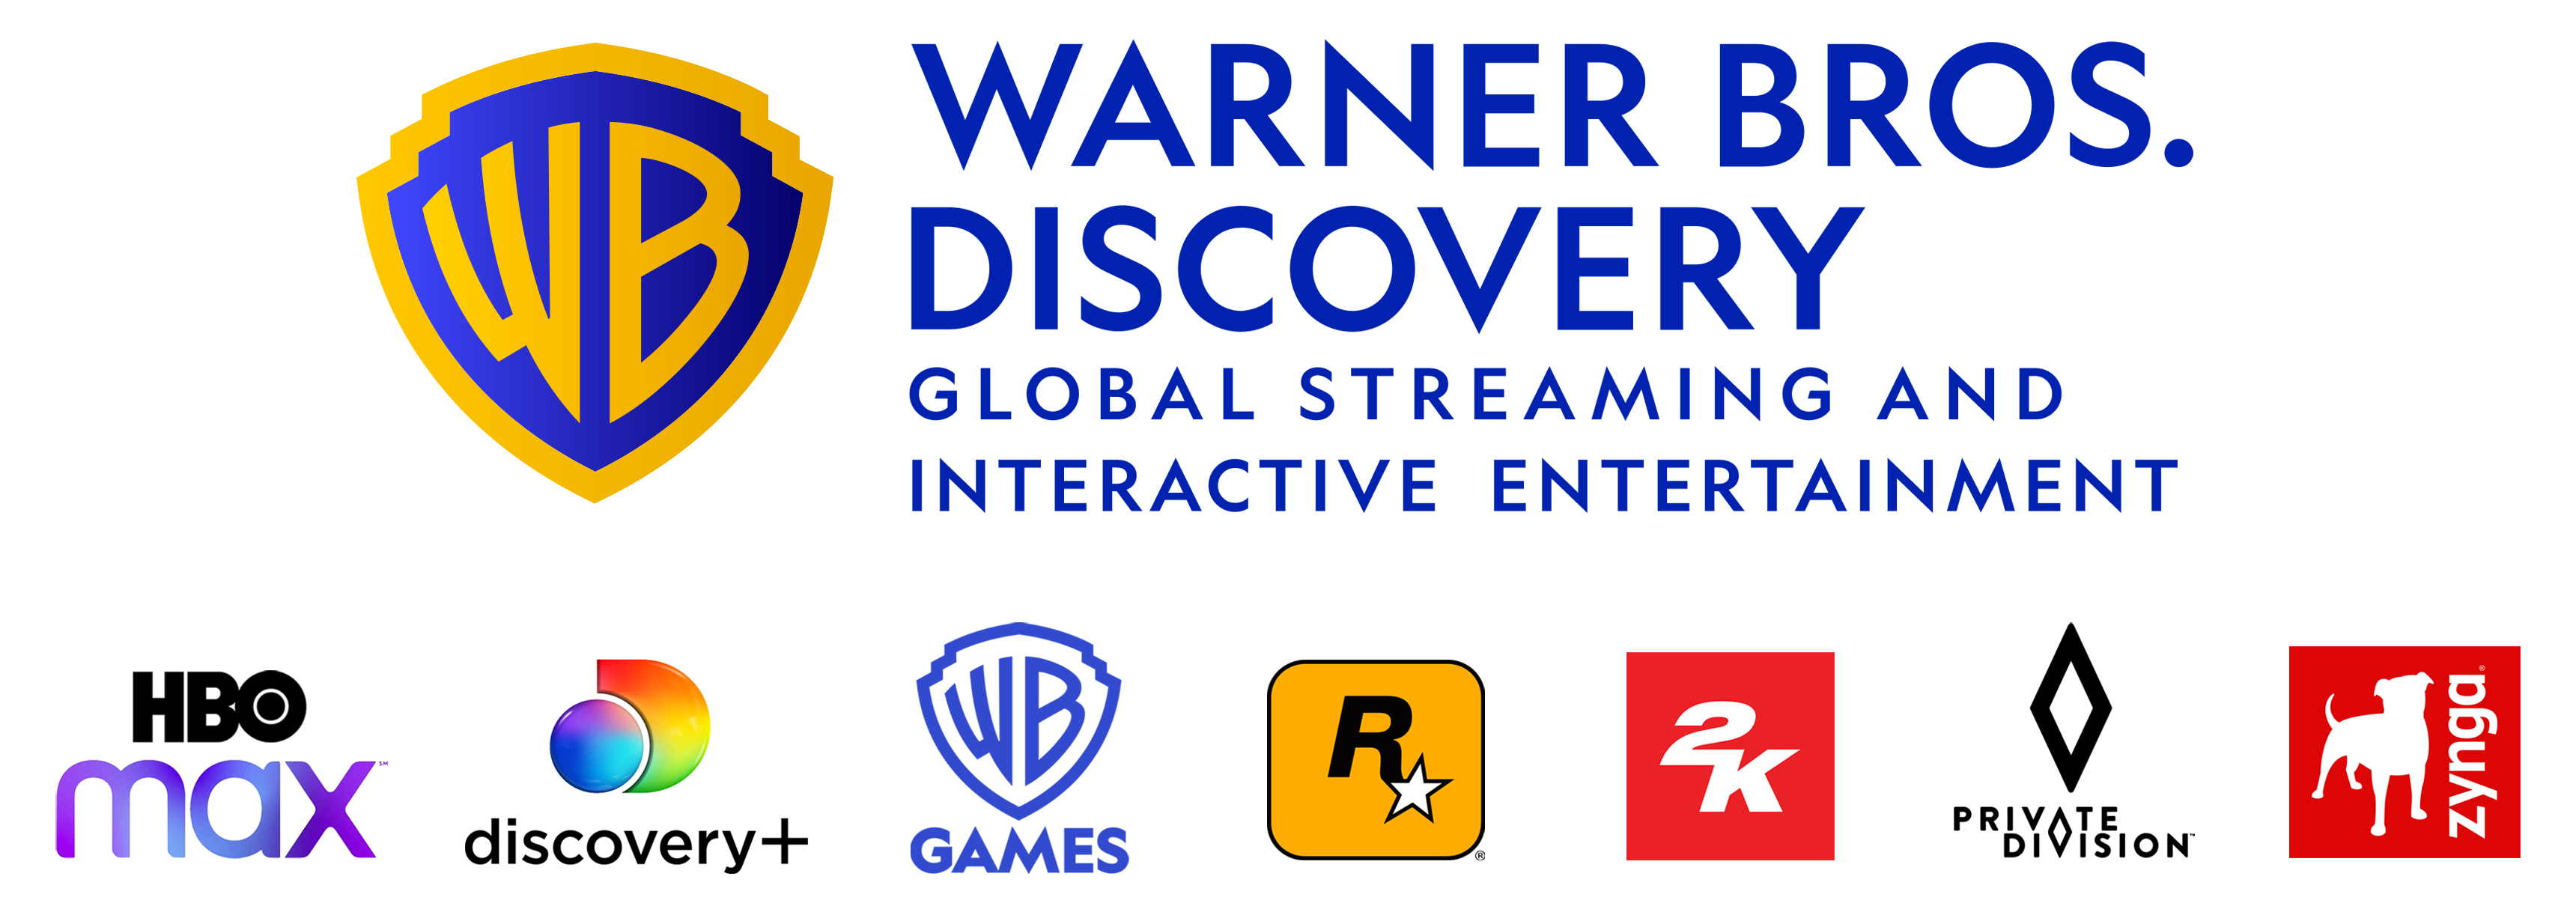 Warner Bros. Games  Warner Bros. Discovery